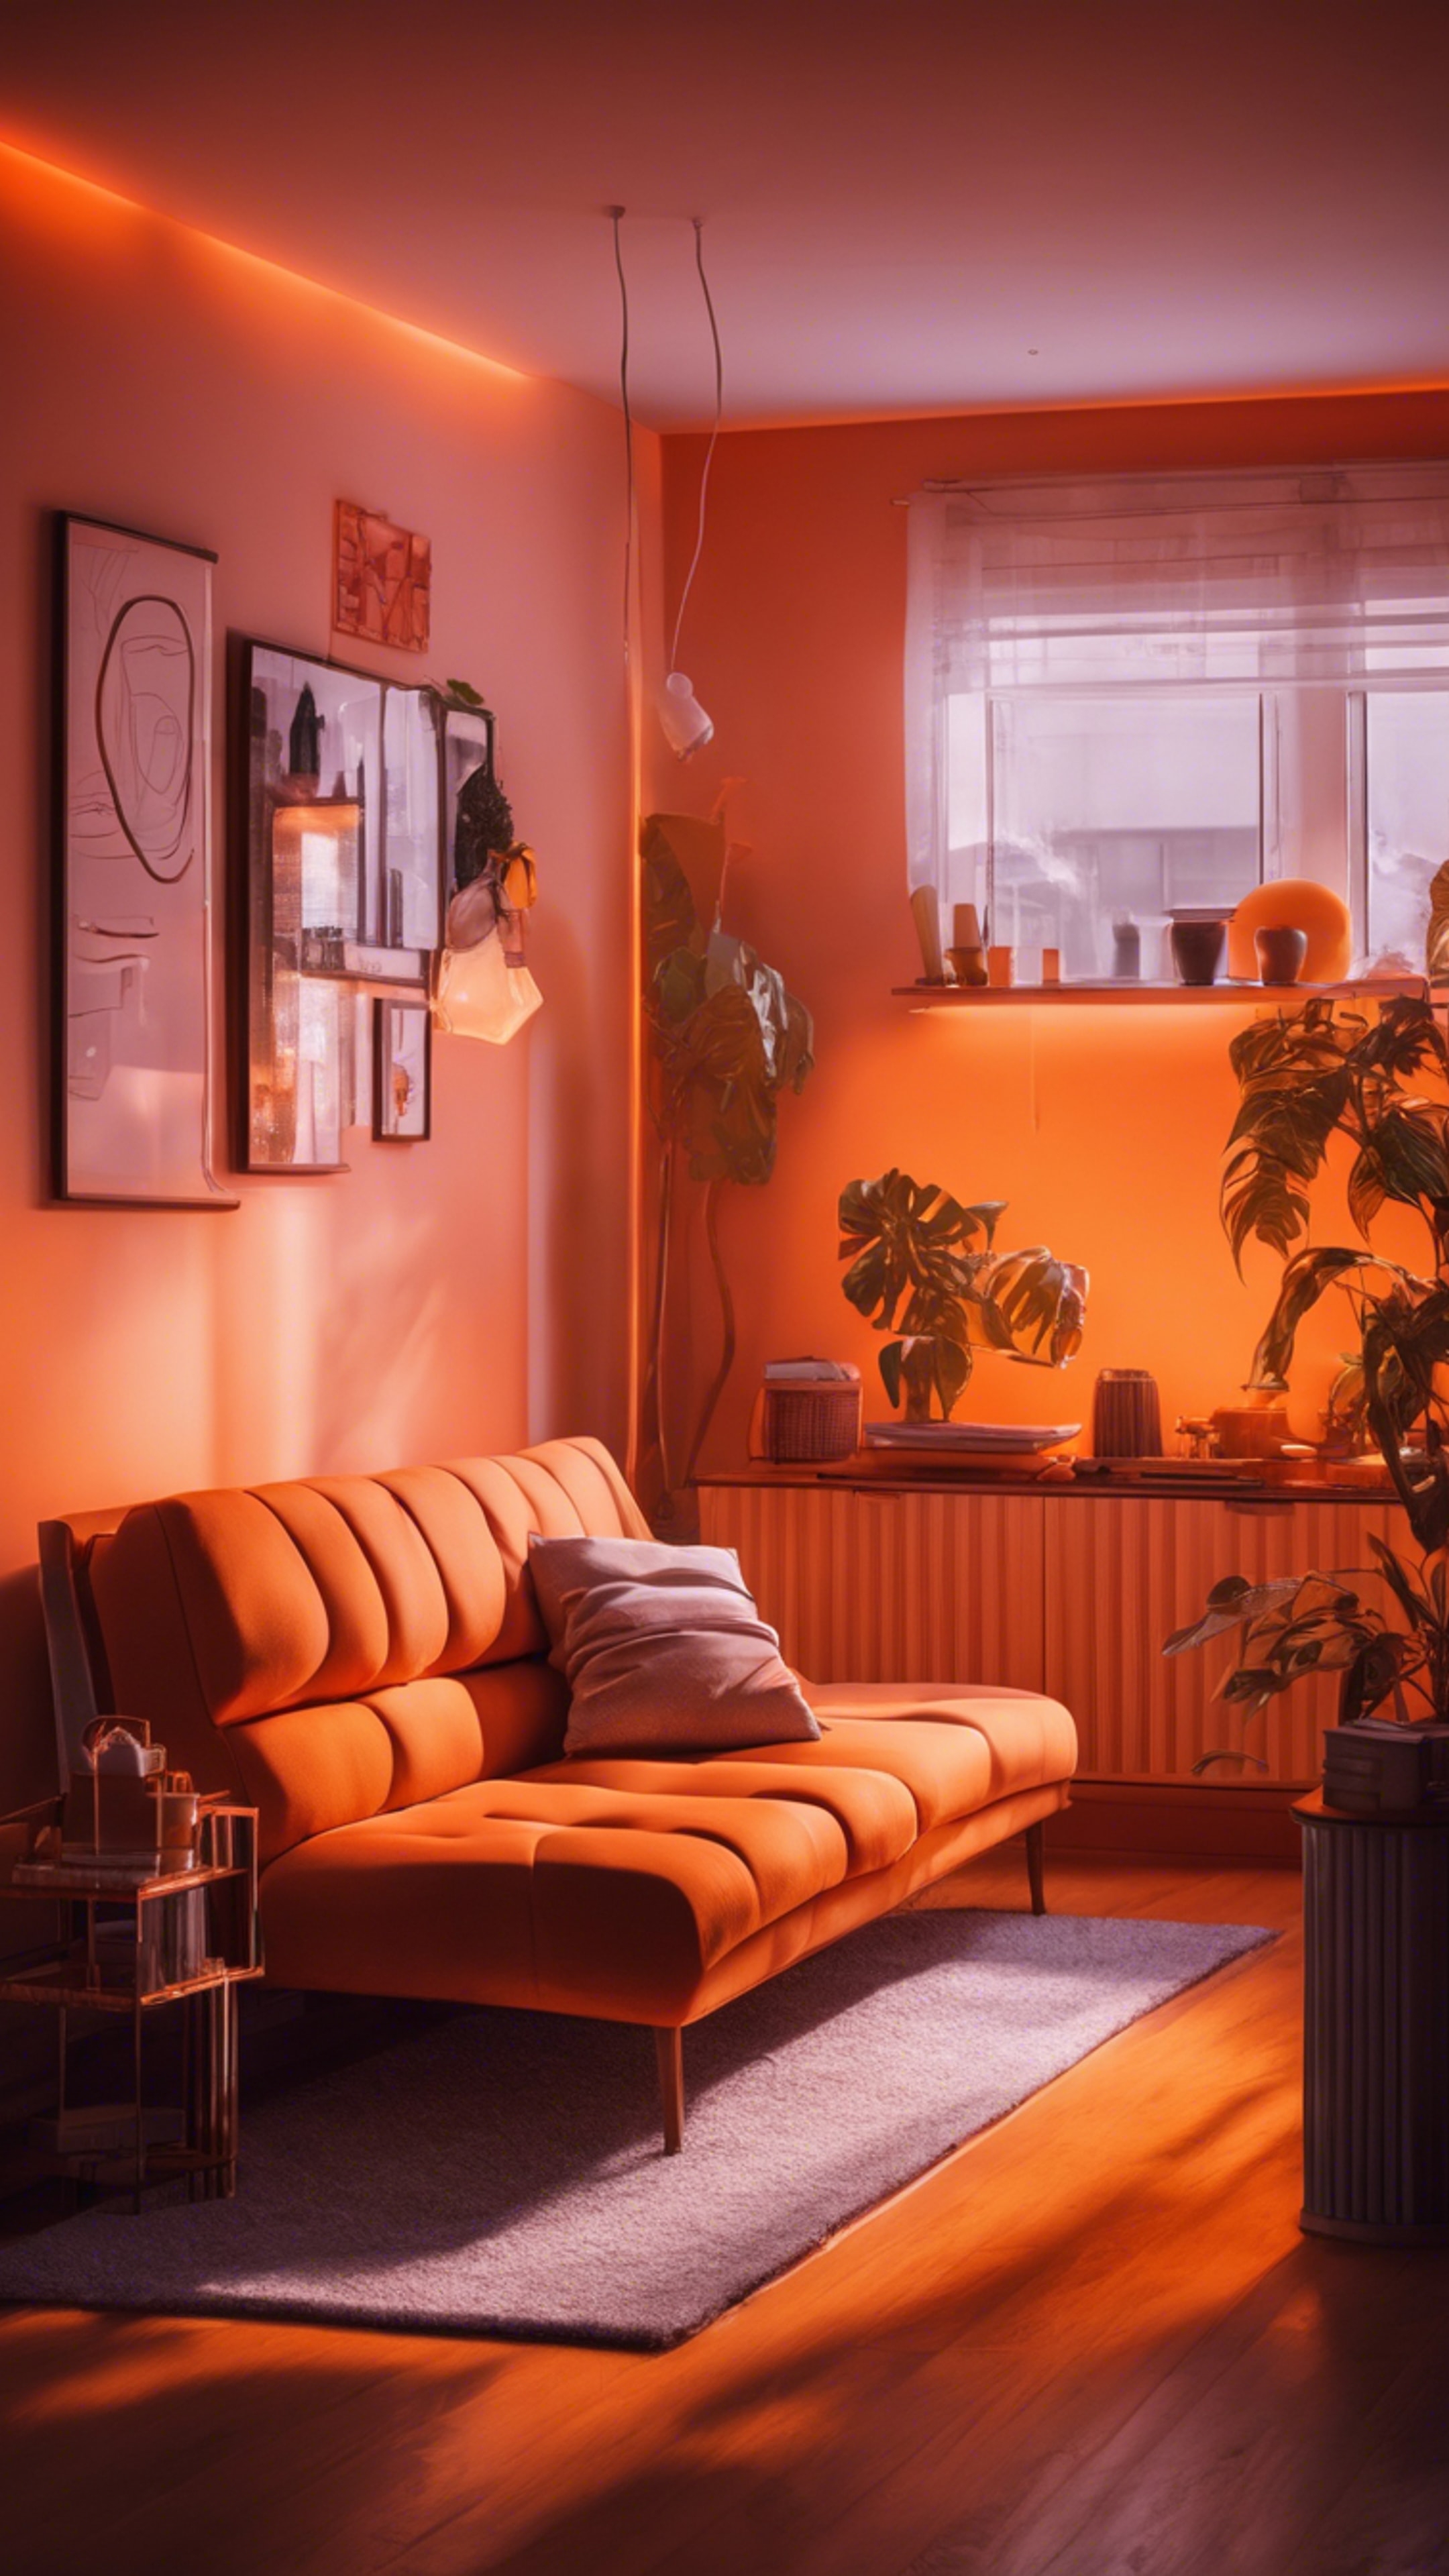 A fresh orange living room with trendy neon lights casting beautiful shadows. Taustakuva[39213640e9864c1aa0c4]